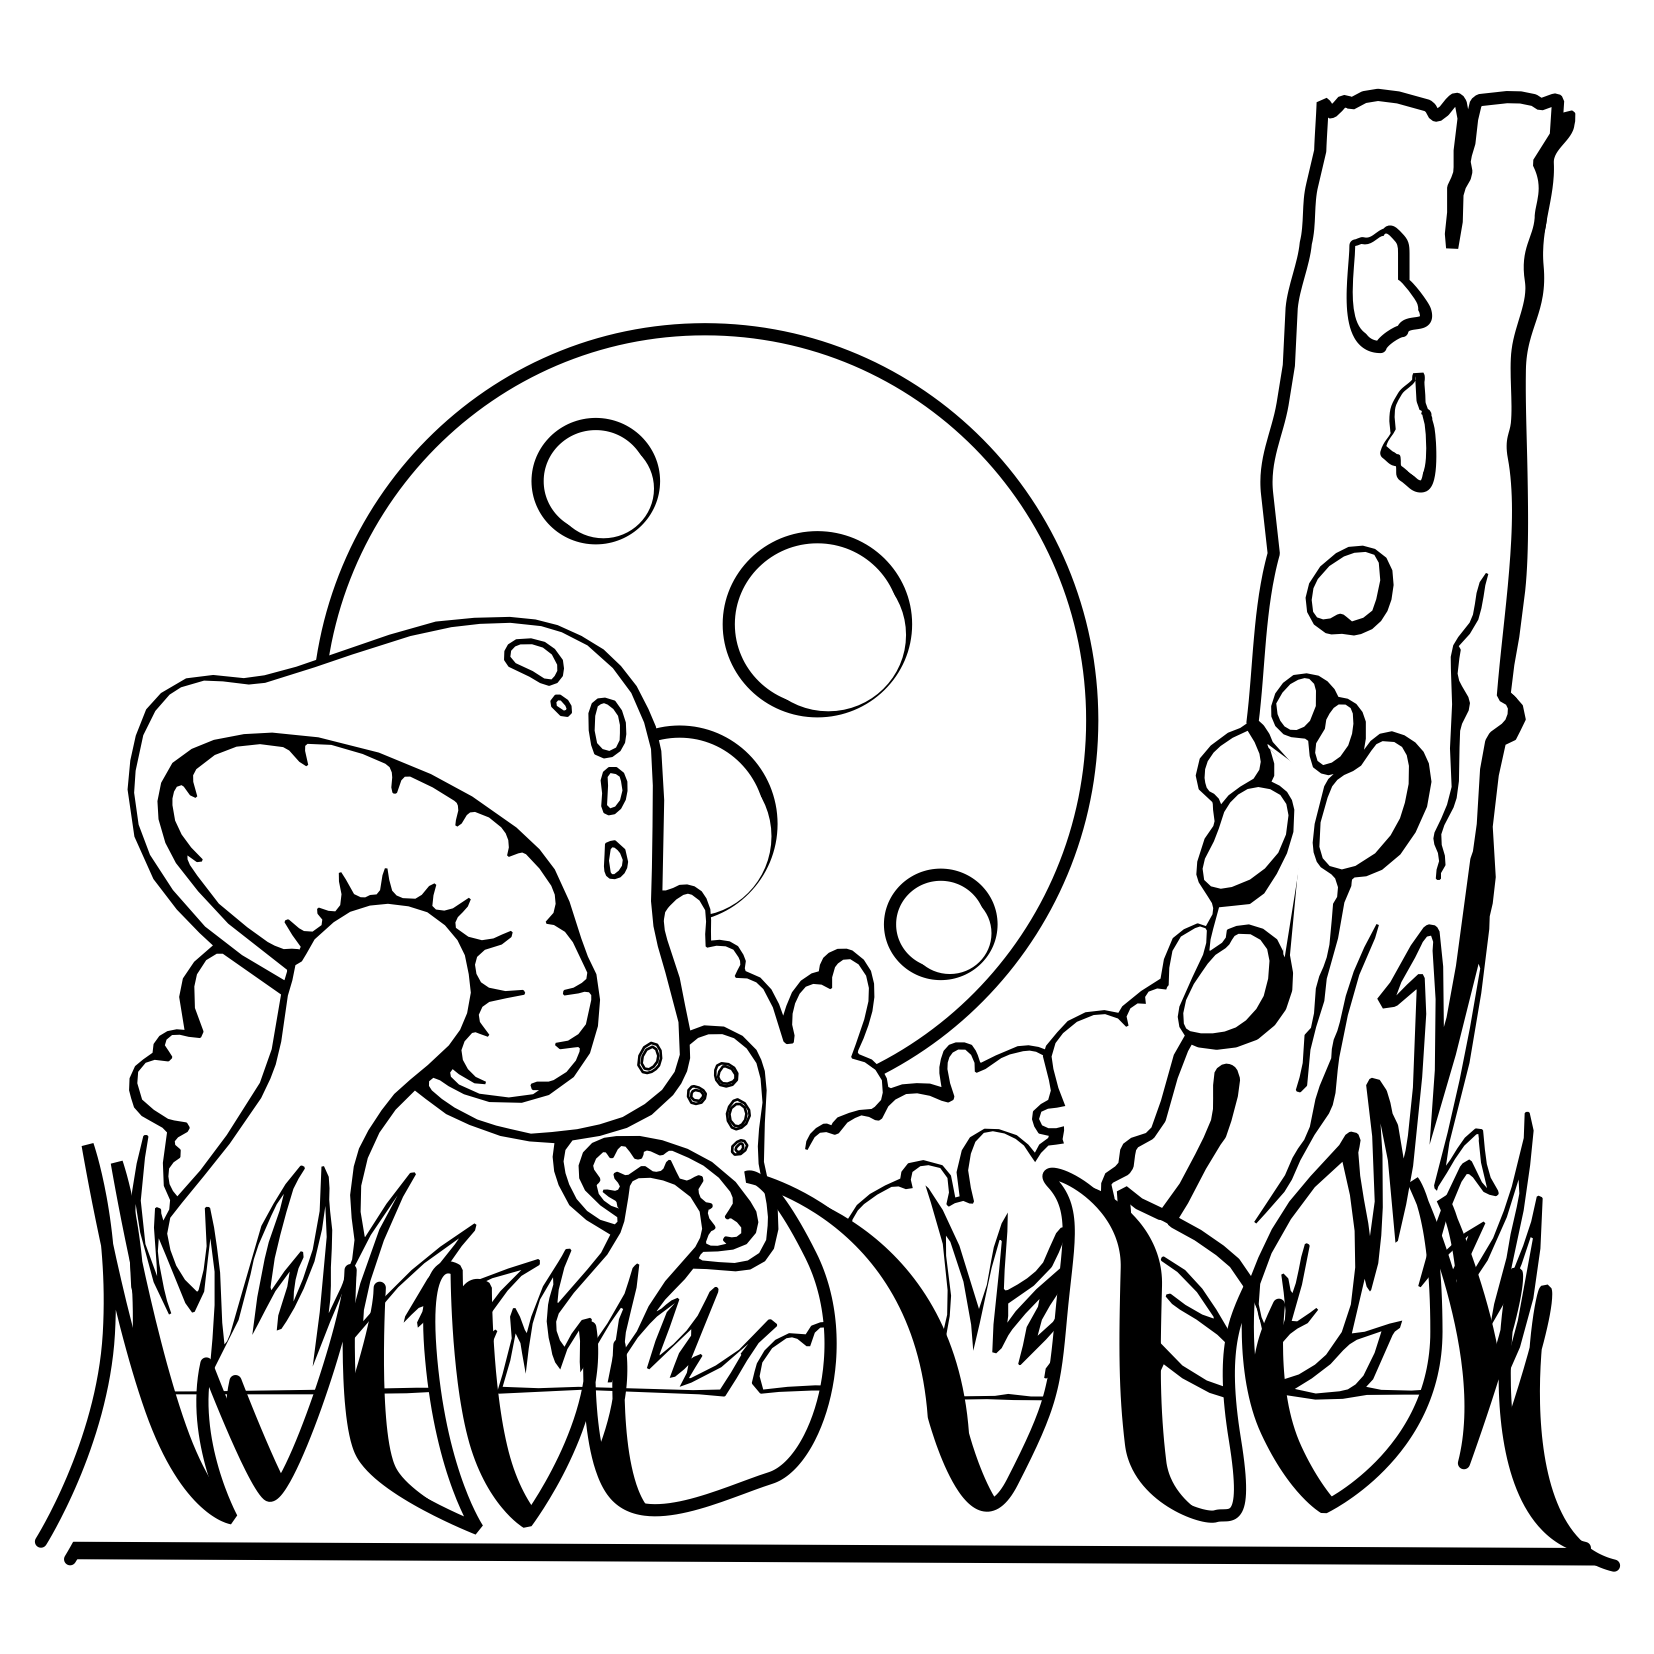 Mushrooms Coloring Pages Nature mushroom fantasy Printable 2021 399 Coloring4free